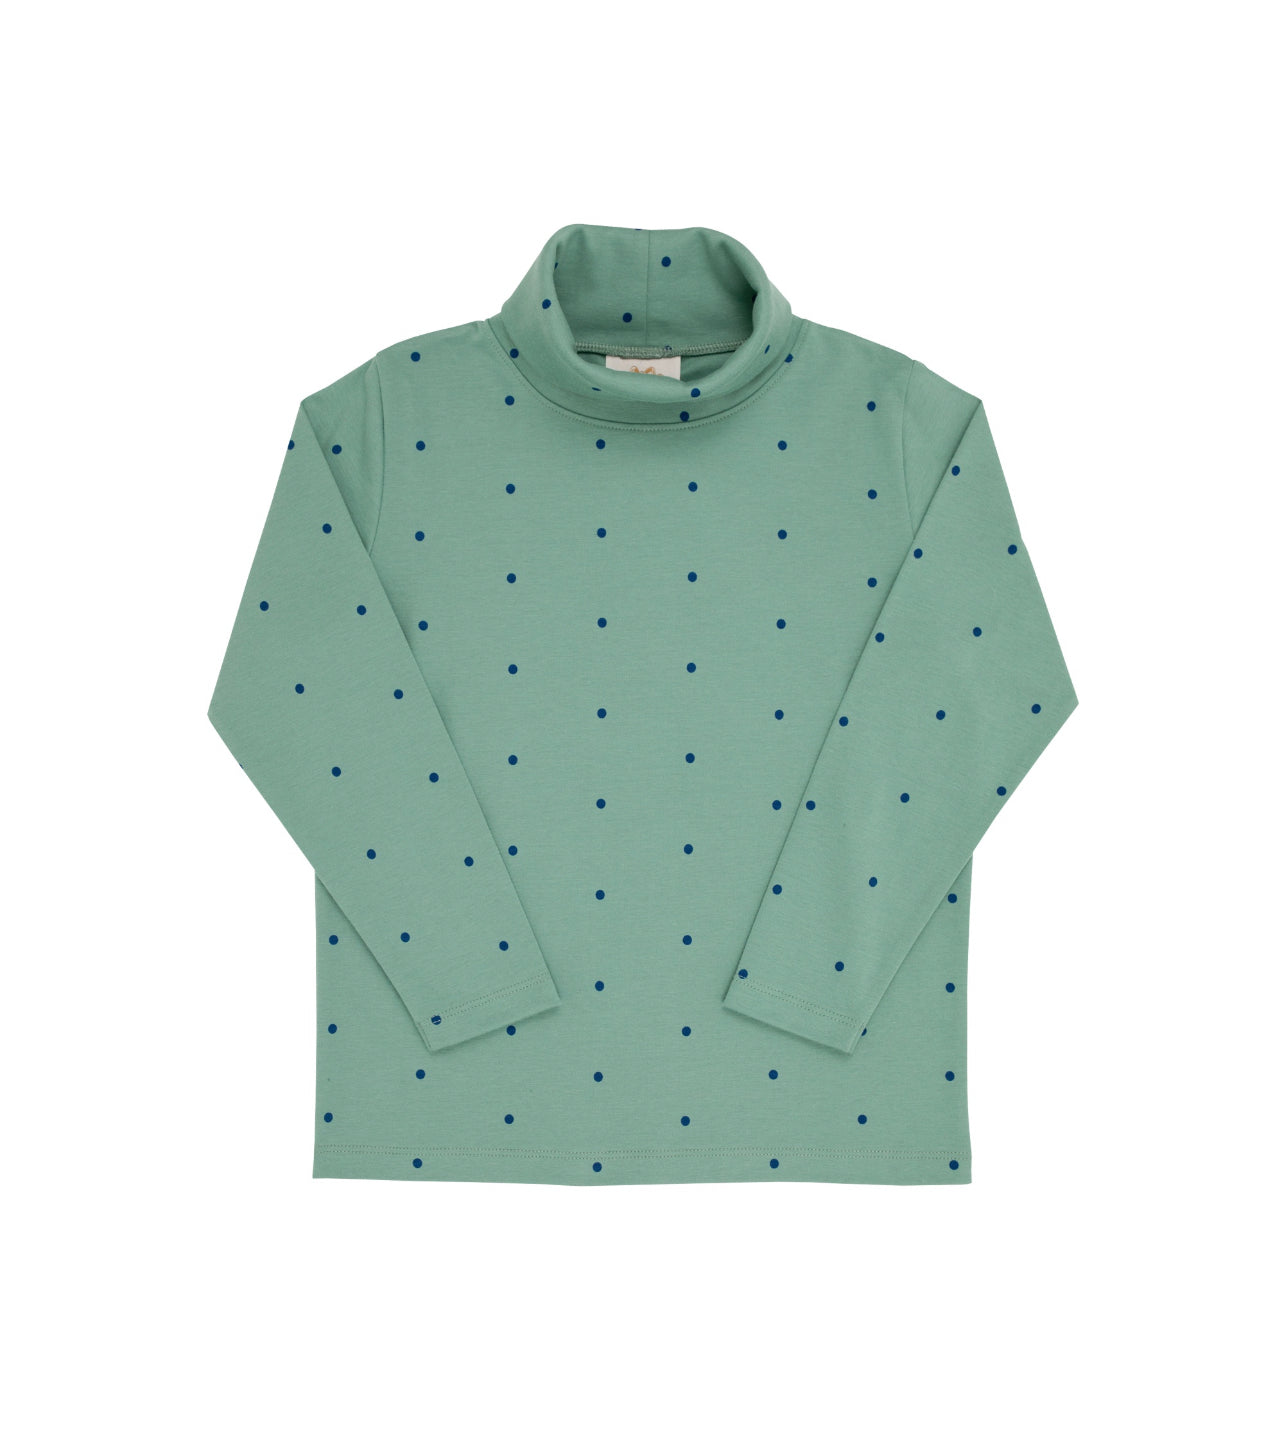 Tatums Turtleneck Shirt Gallatin Green Microdot